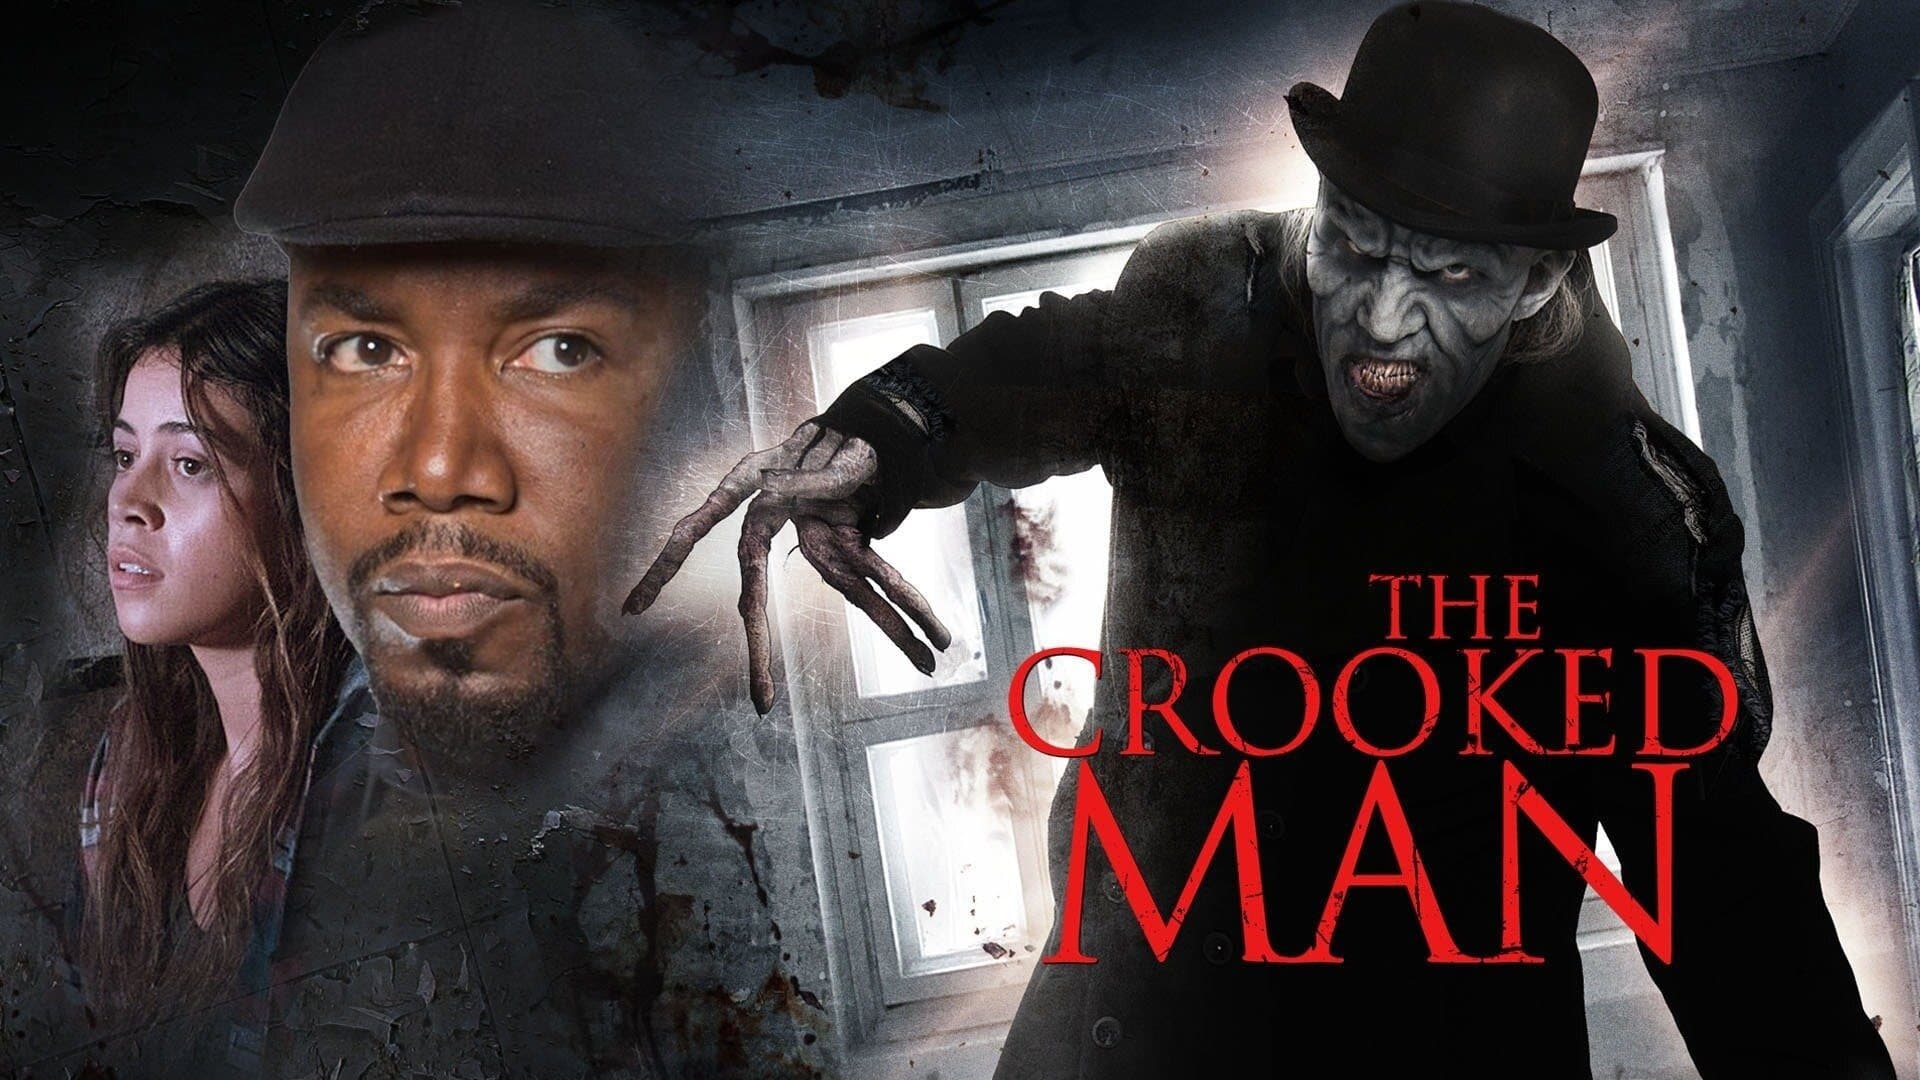 Ông Kẹ Trở Lại - The Crooked Man